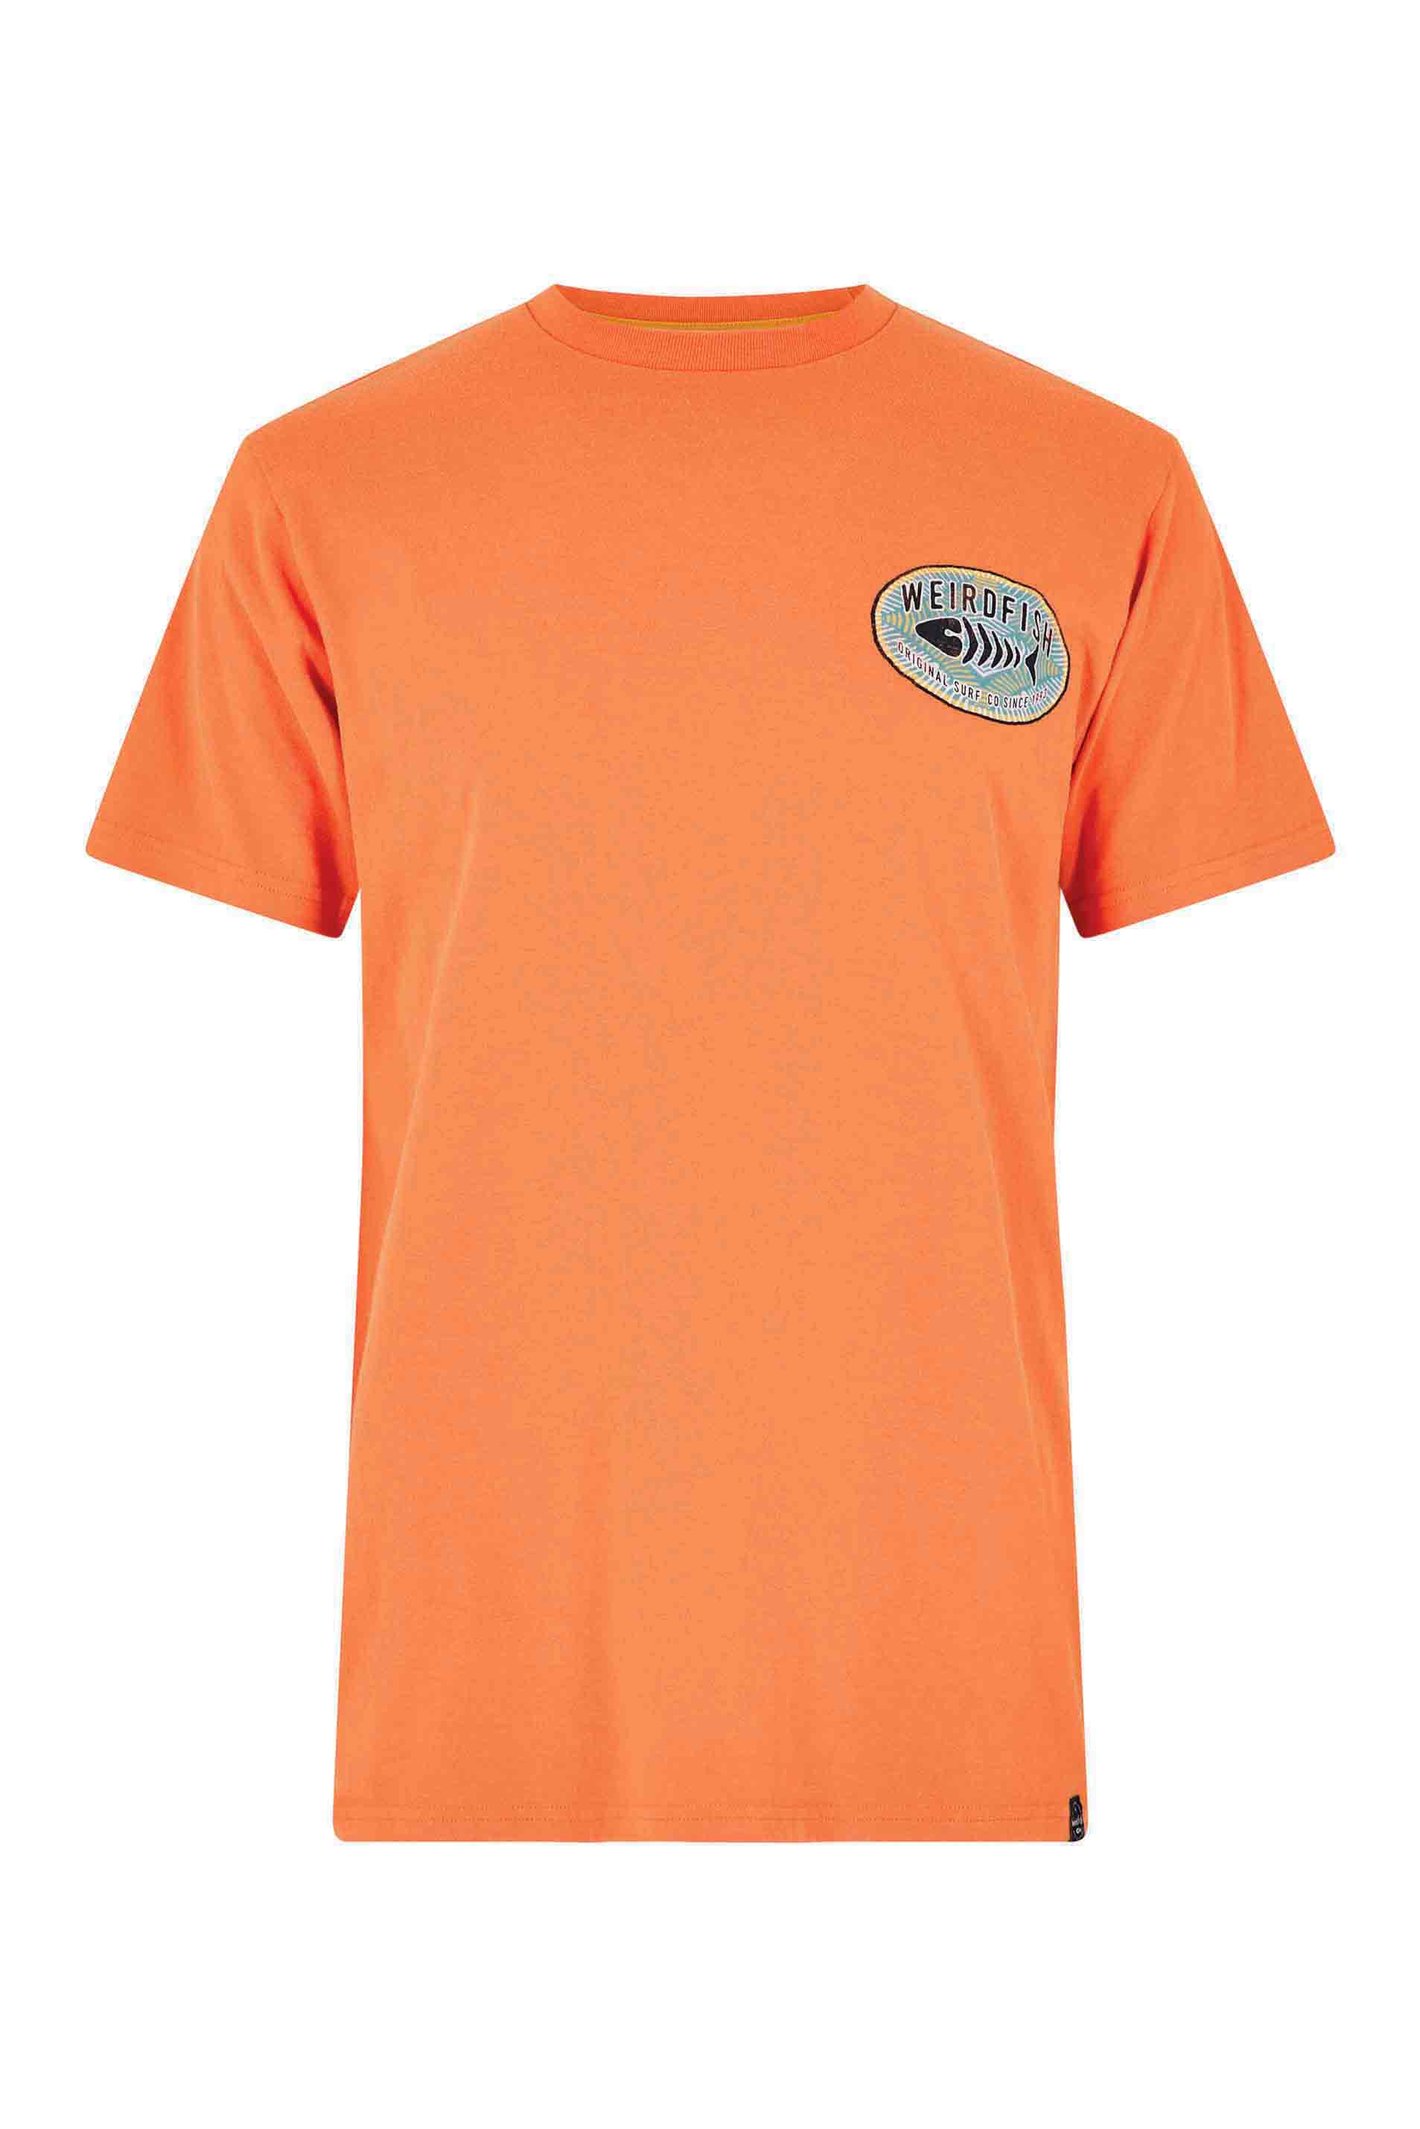 Weird Fish Original Surf Graphic T-Shirt Mango Size L